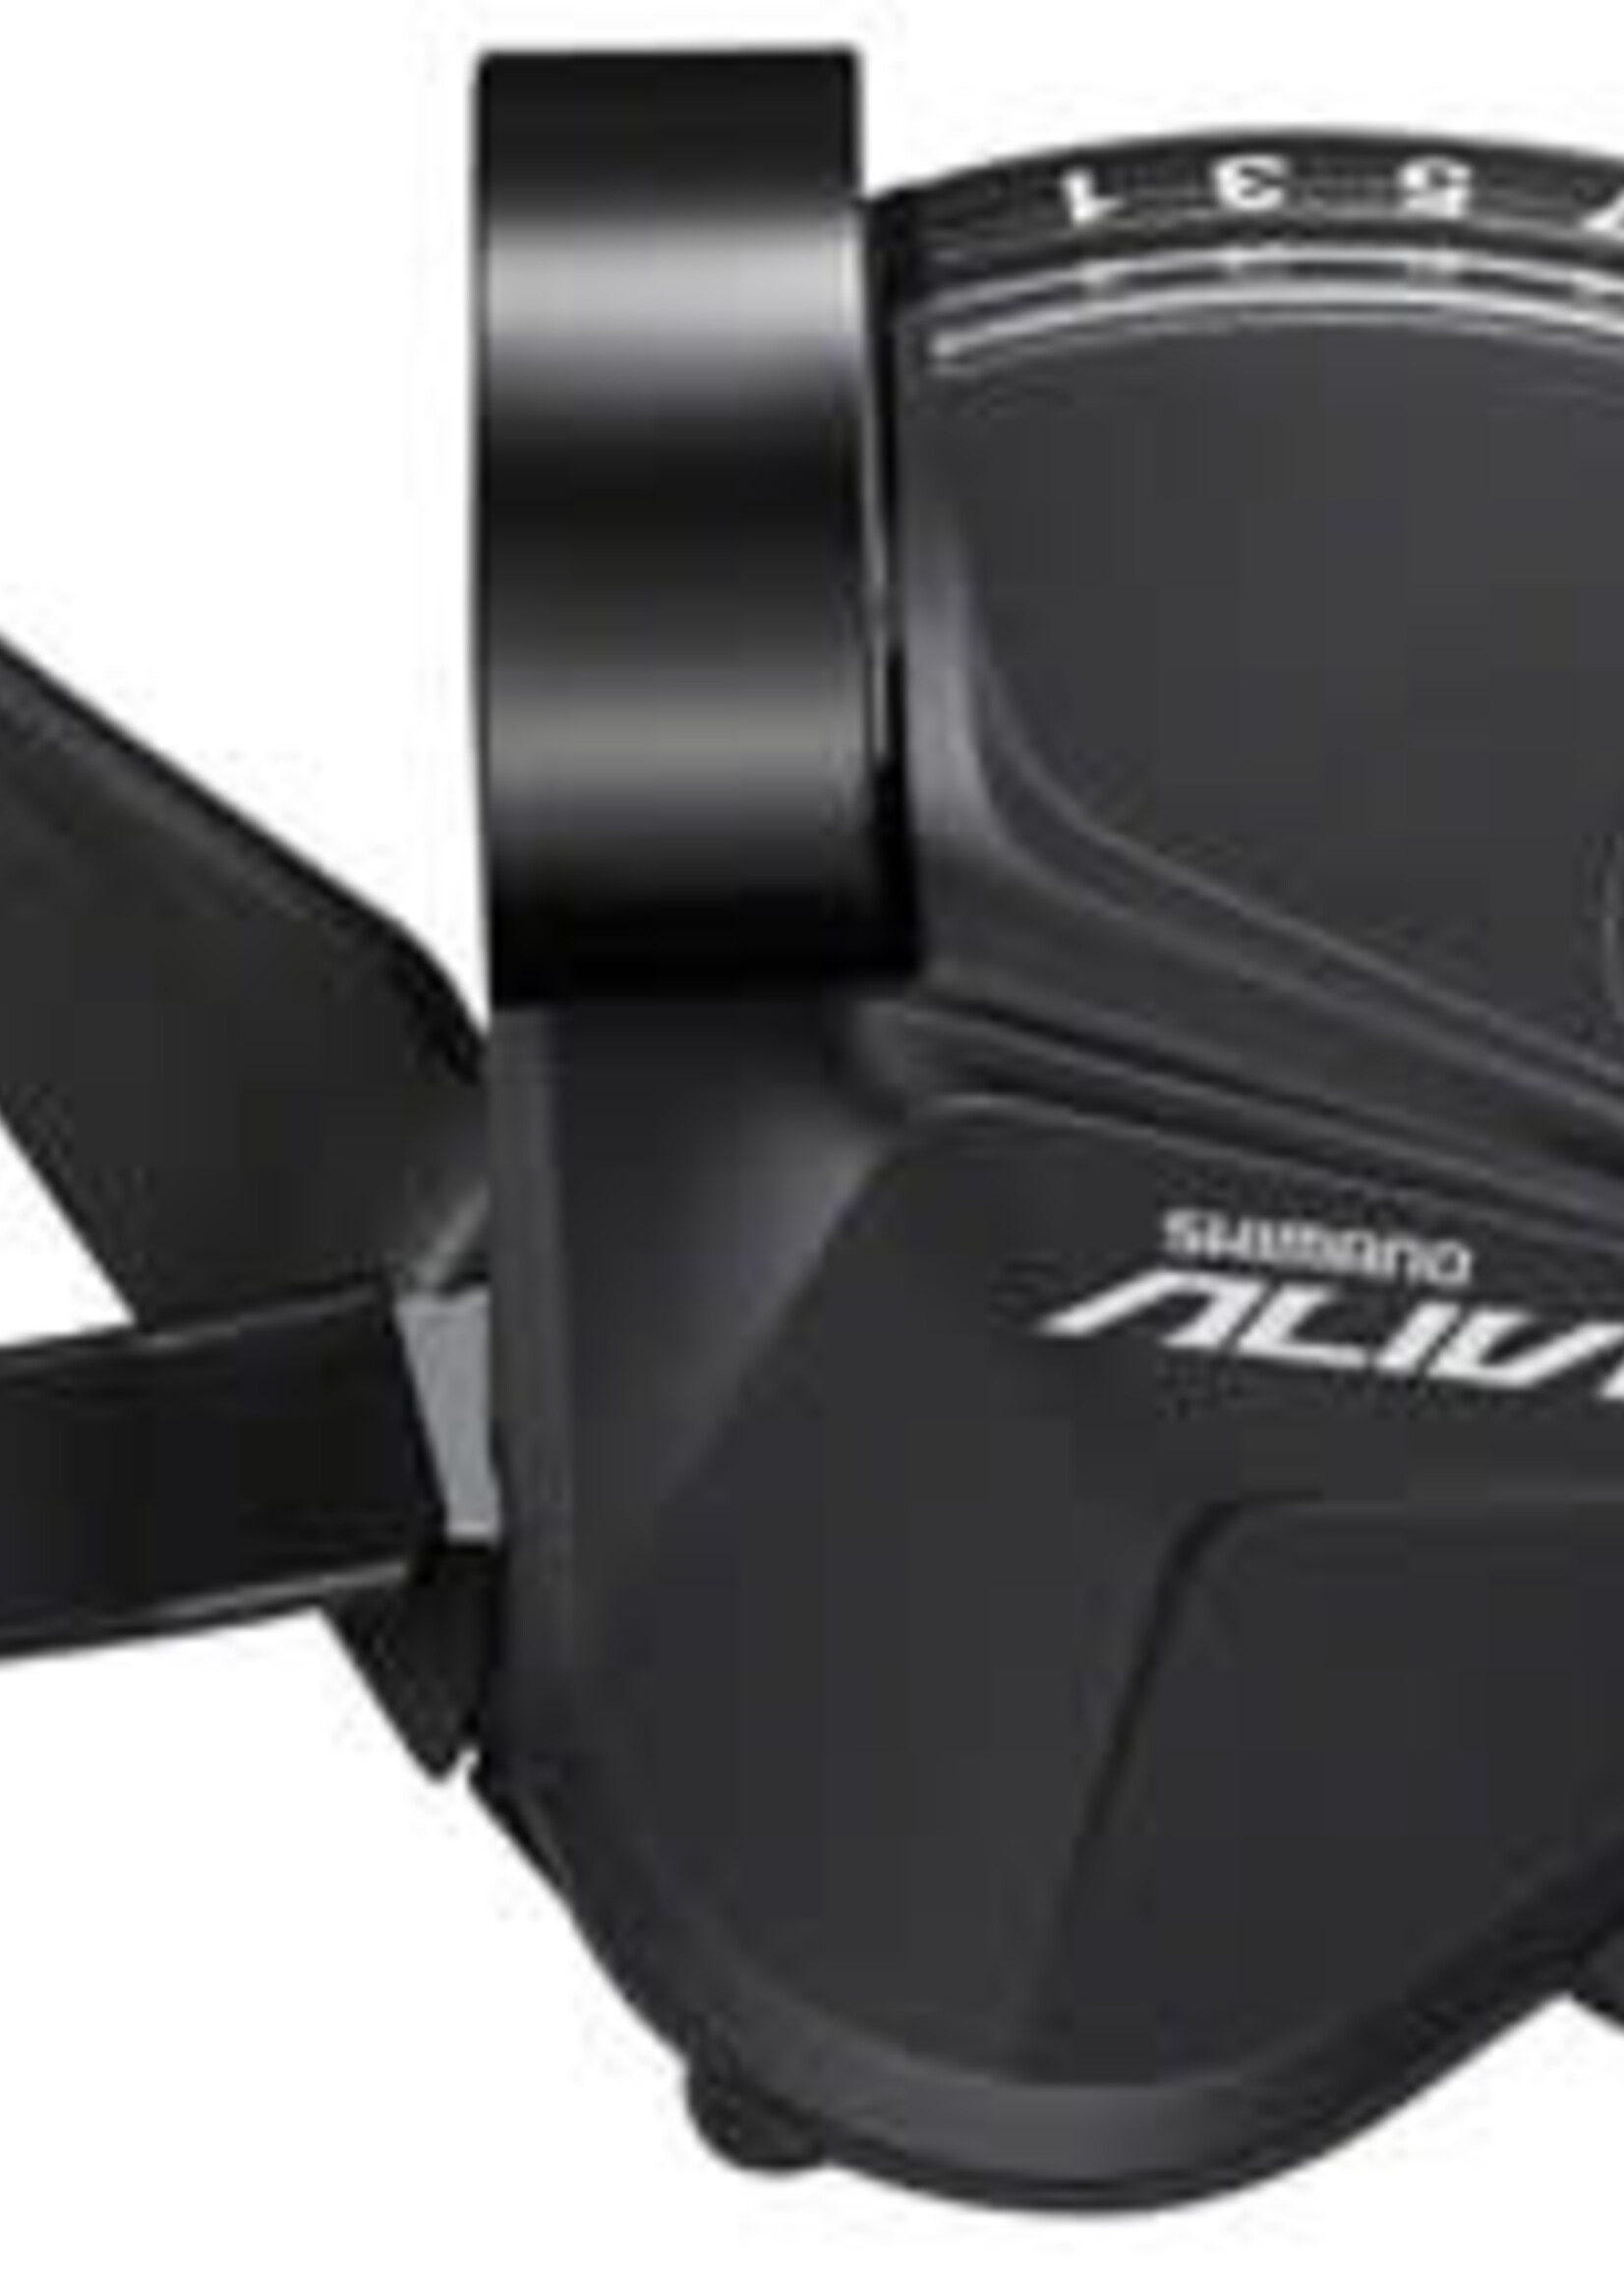 Shimano Shimano Alivio SL-M3100-R Shifter - Right 9-Speed RapidFire Plus Optical Gear Display